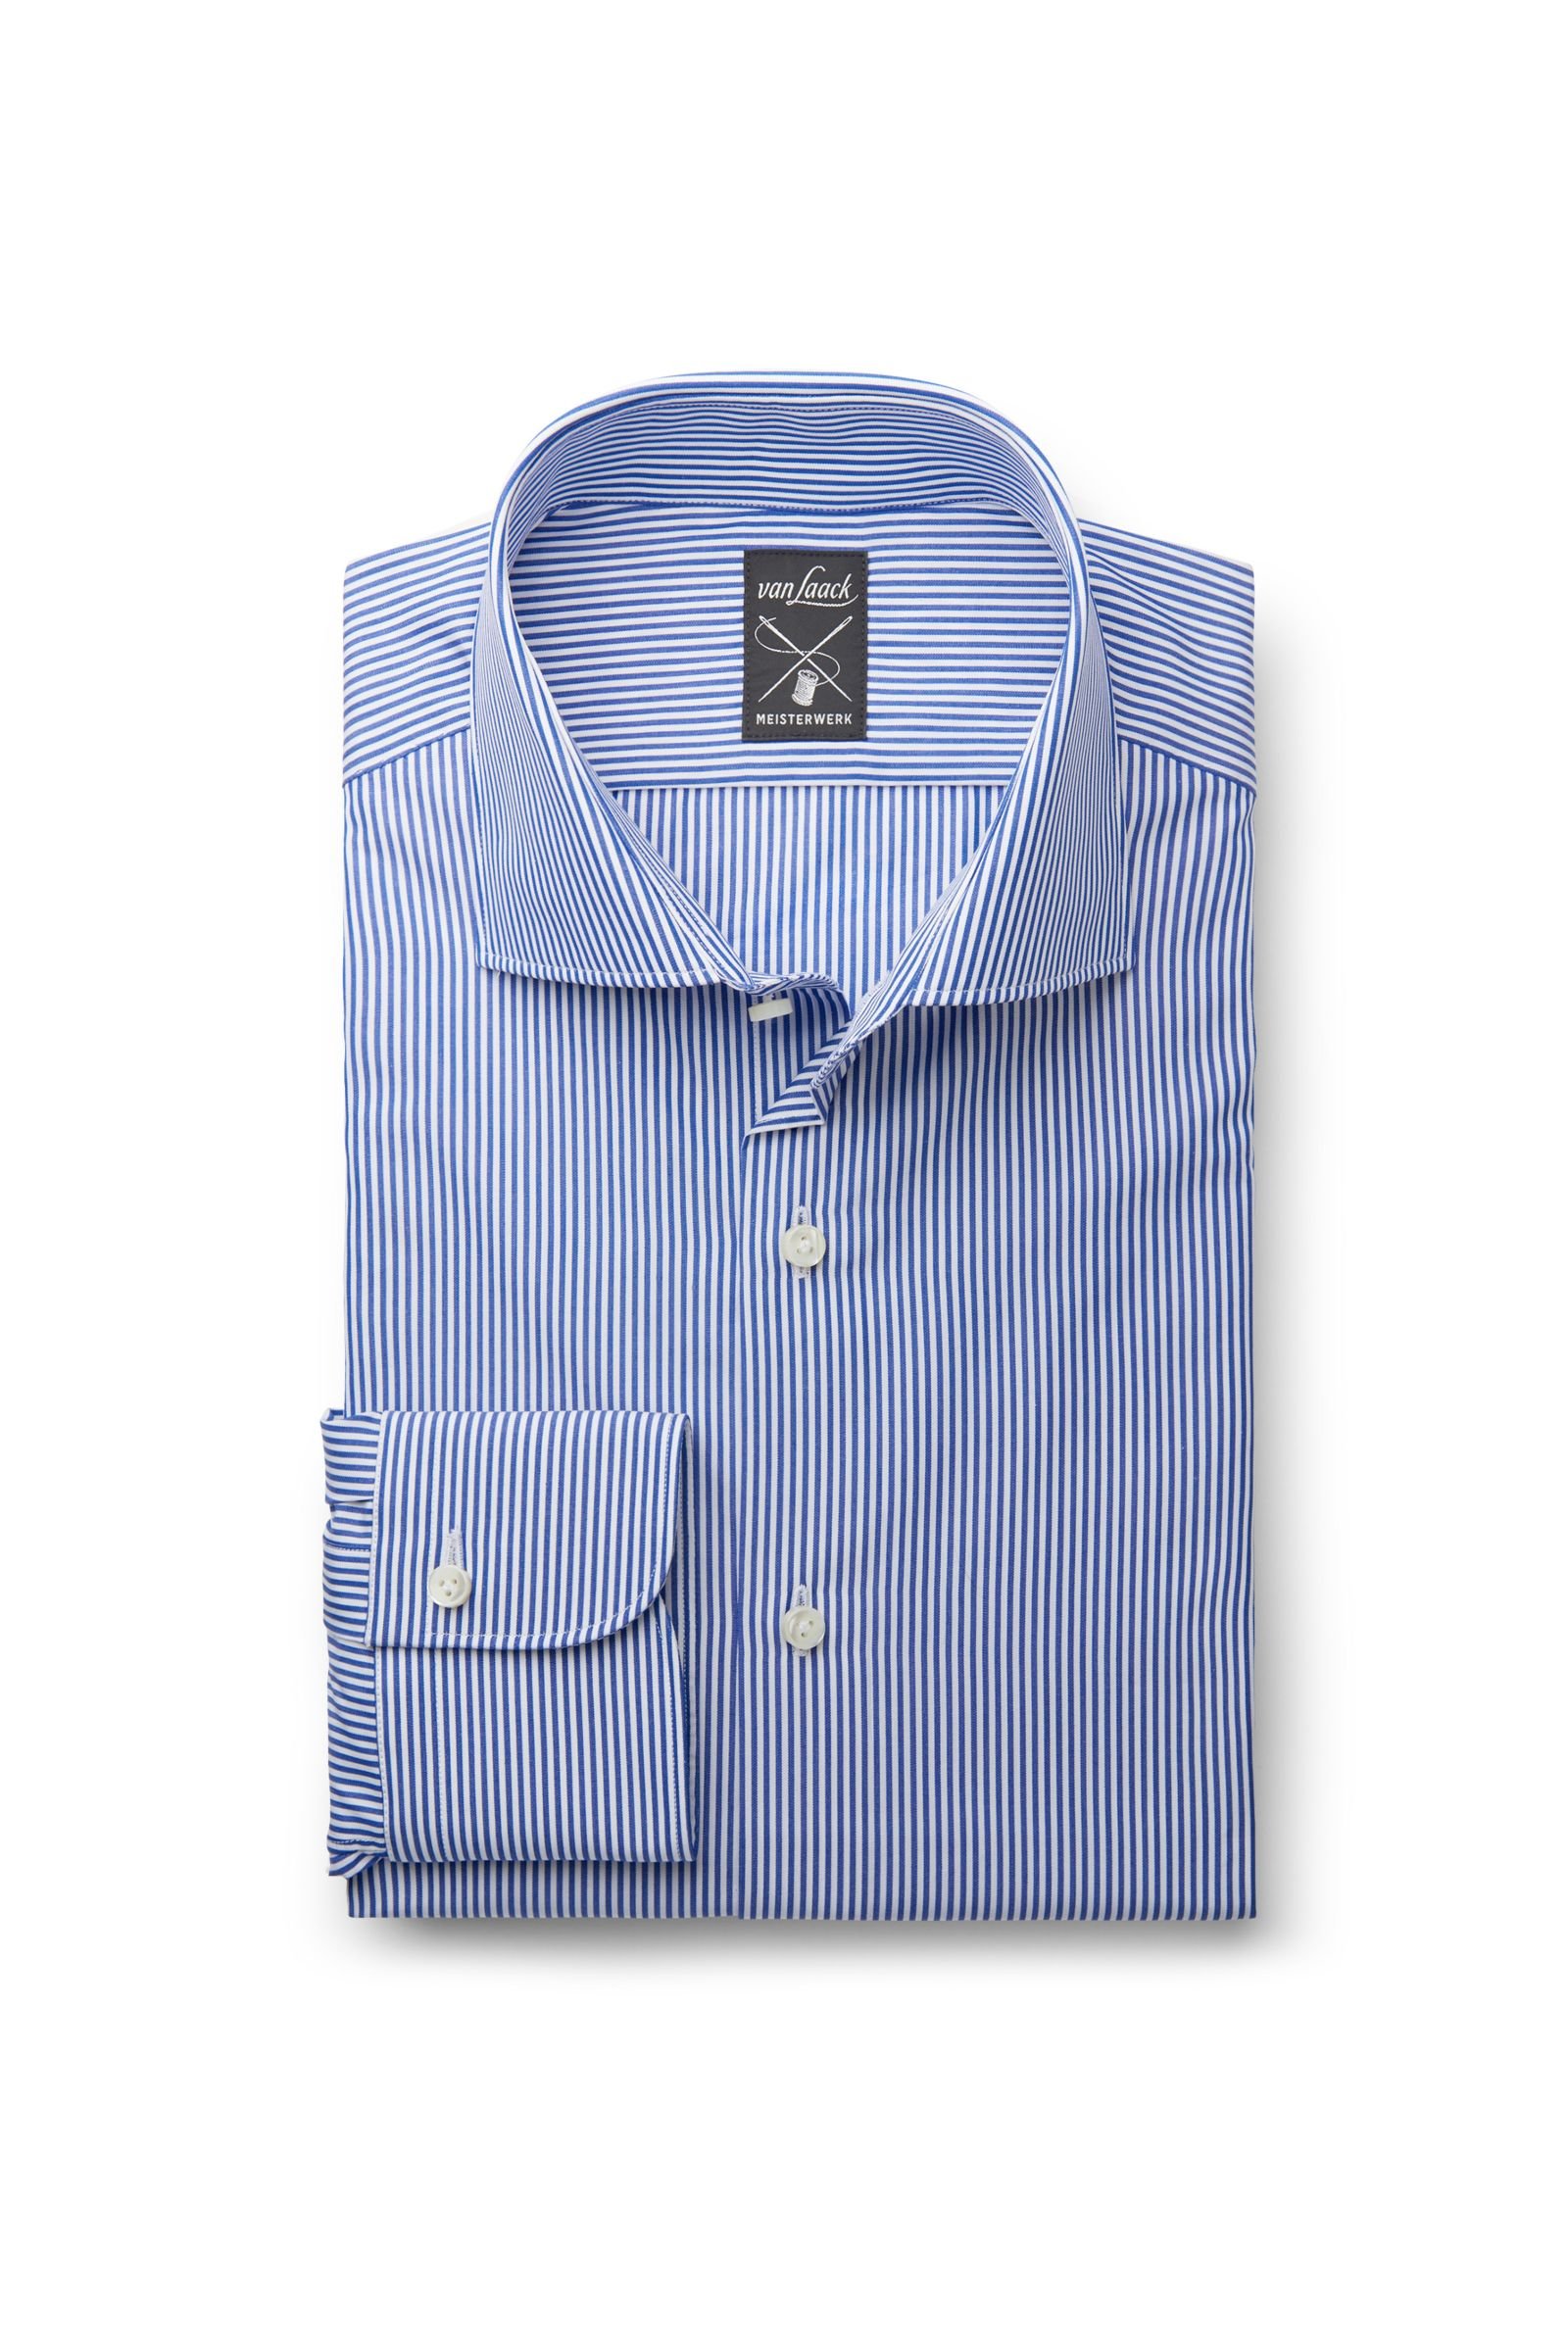 Business shirt 'Mivara Tailor Fit' shark collar blue striped